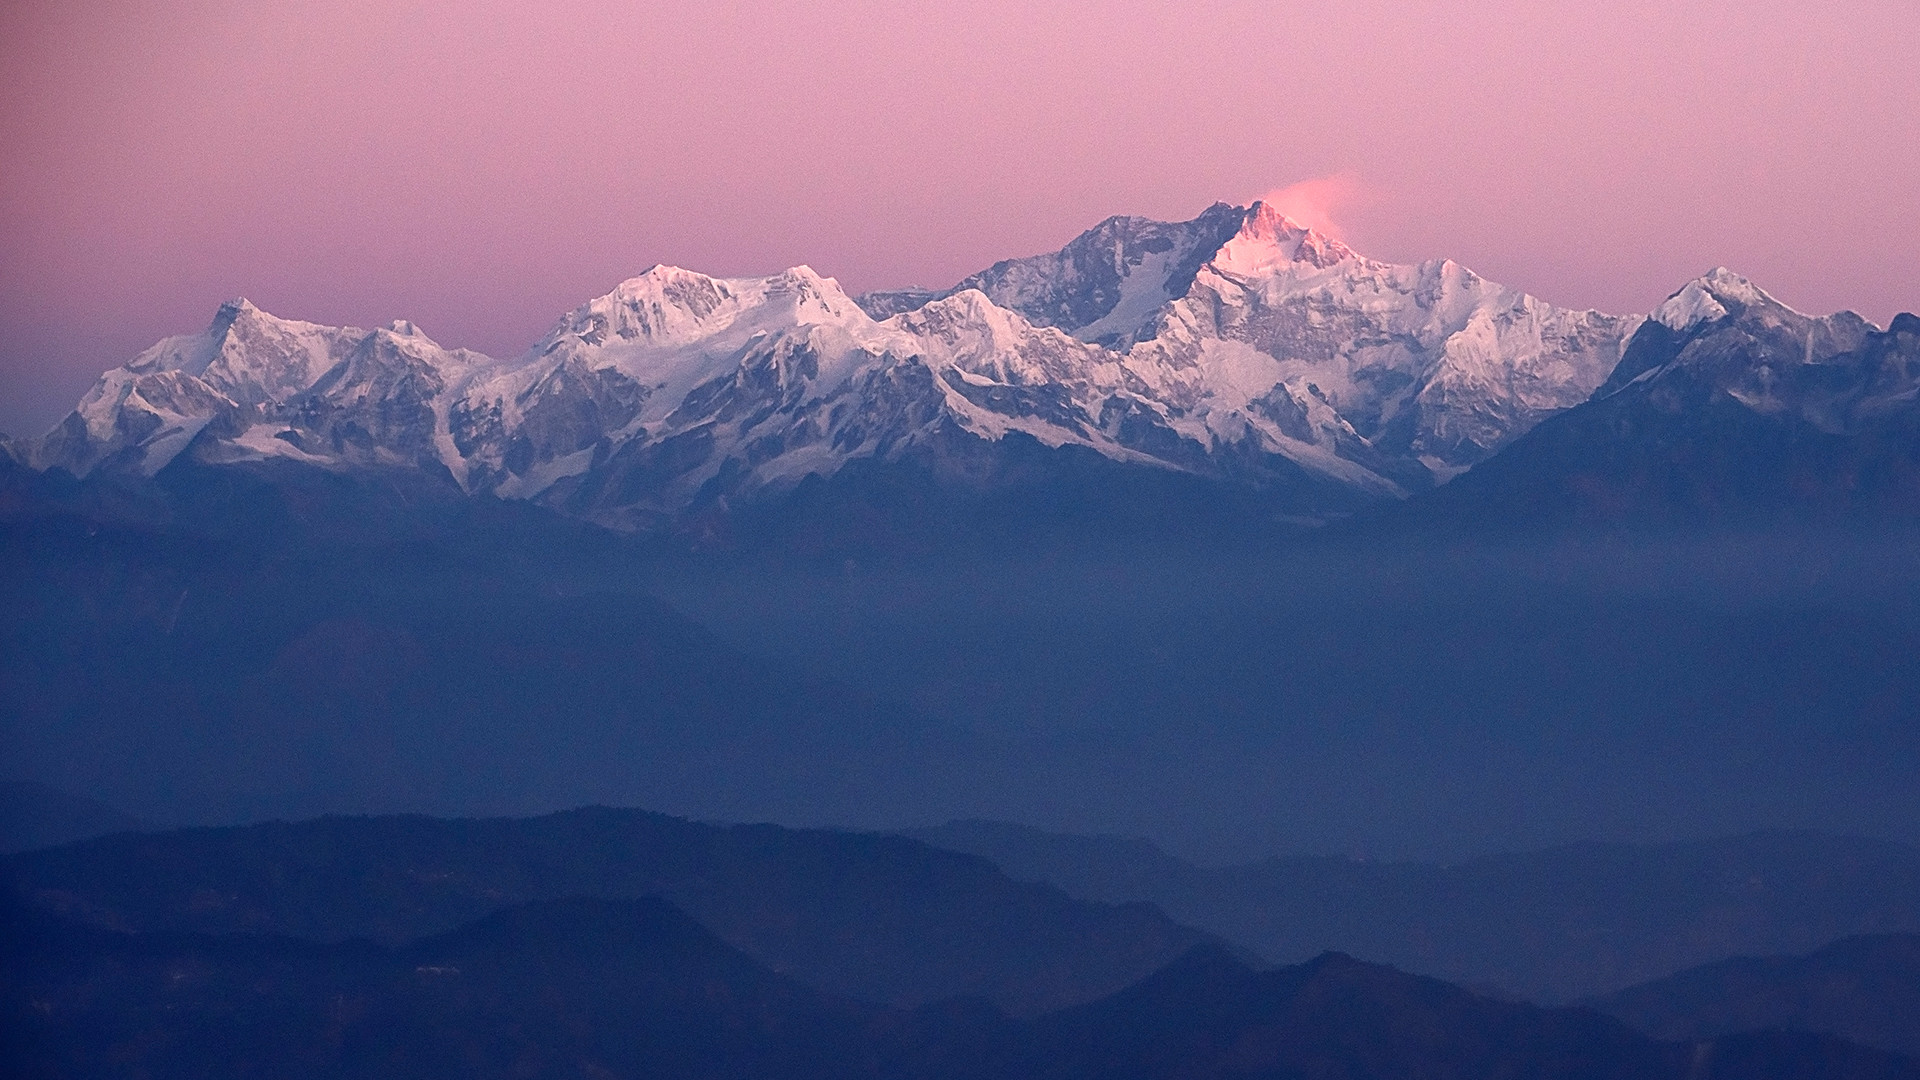 1920x1080 File:Magnificent-kanchanjhunga-mountain-range-in-nepal-.jpg